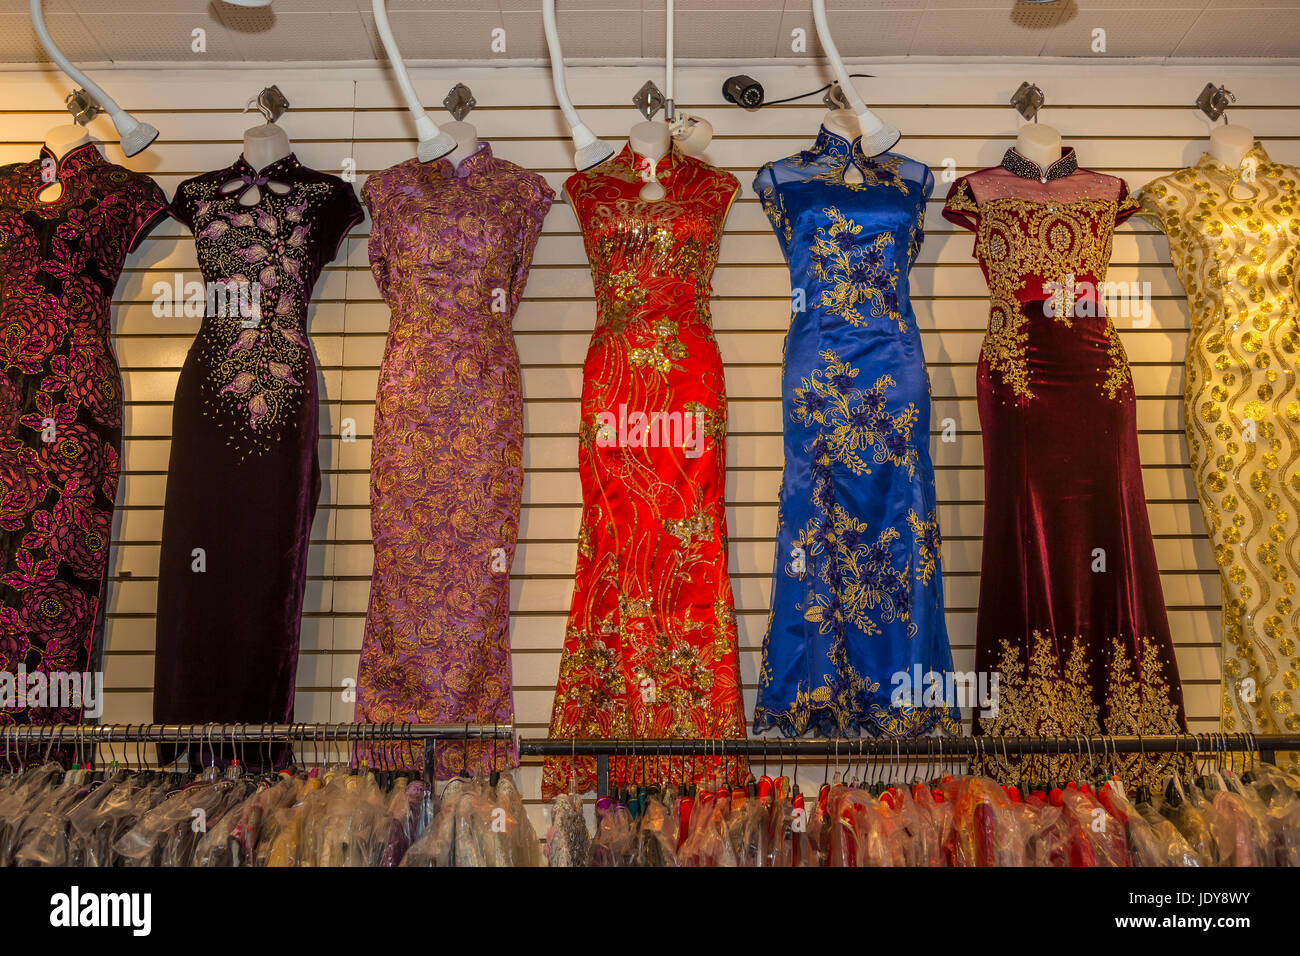 dresses for sale, display, clothing store, Stockton Street, Chinatown, San Francisco, California, United States Stock Photo